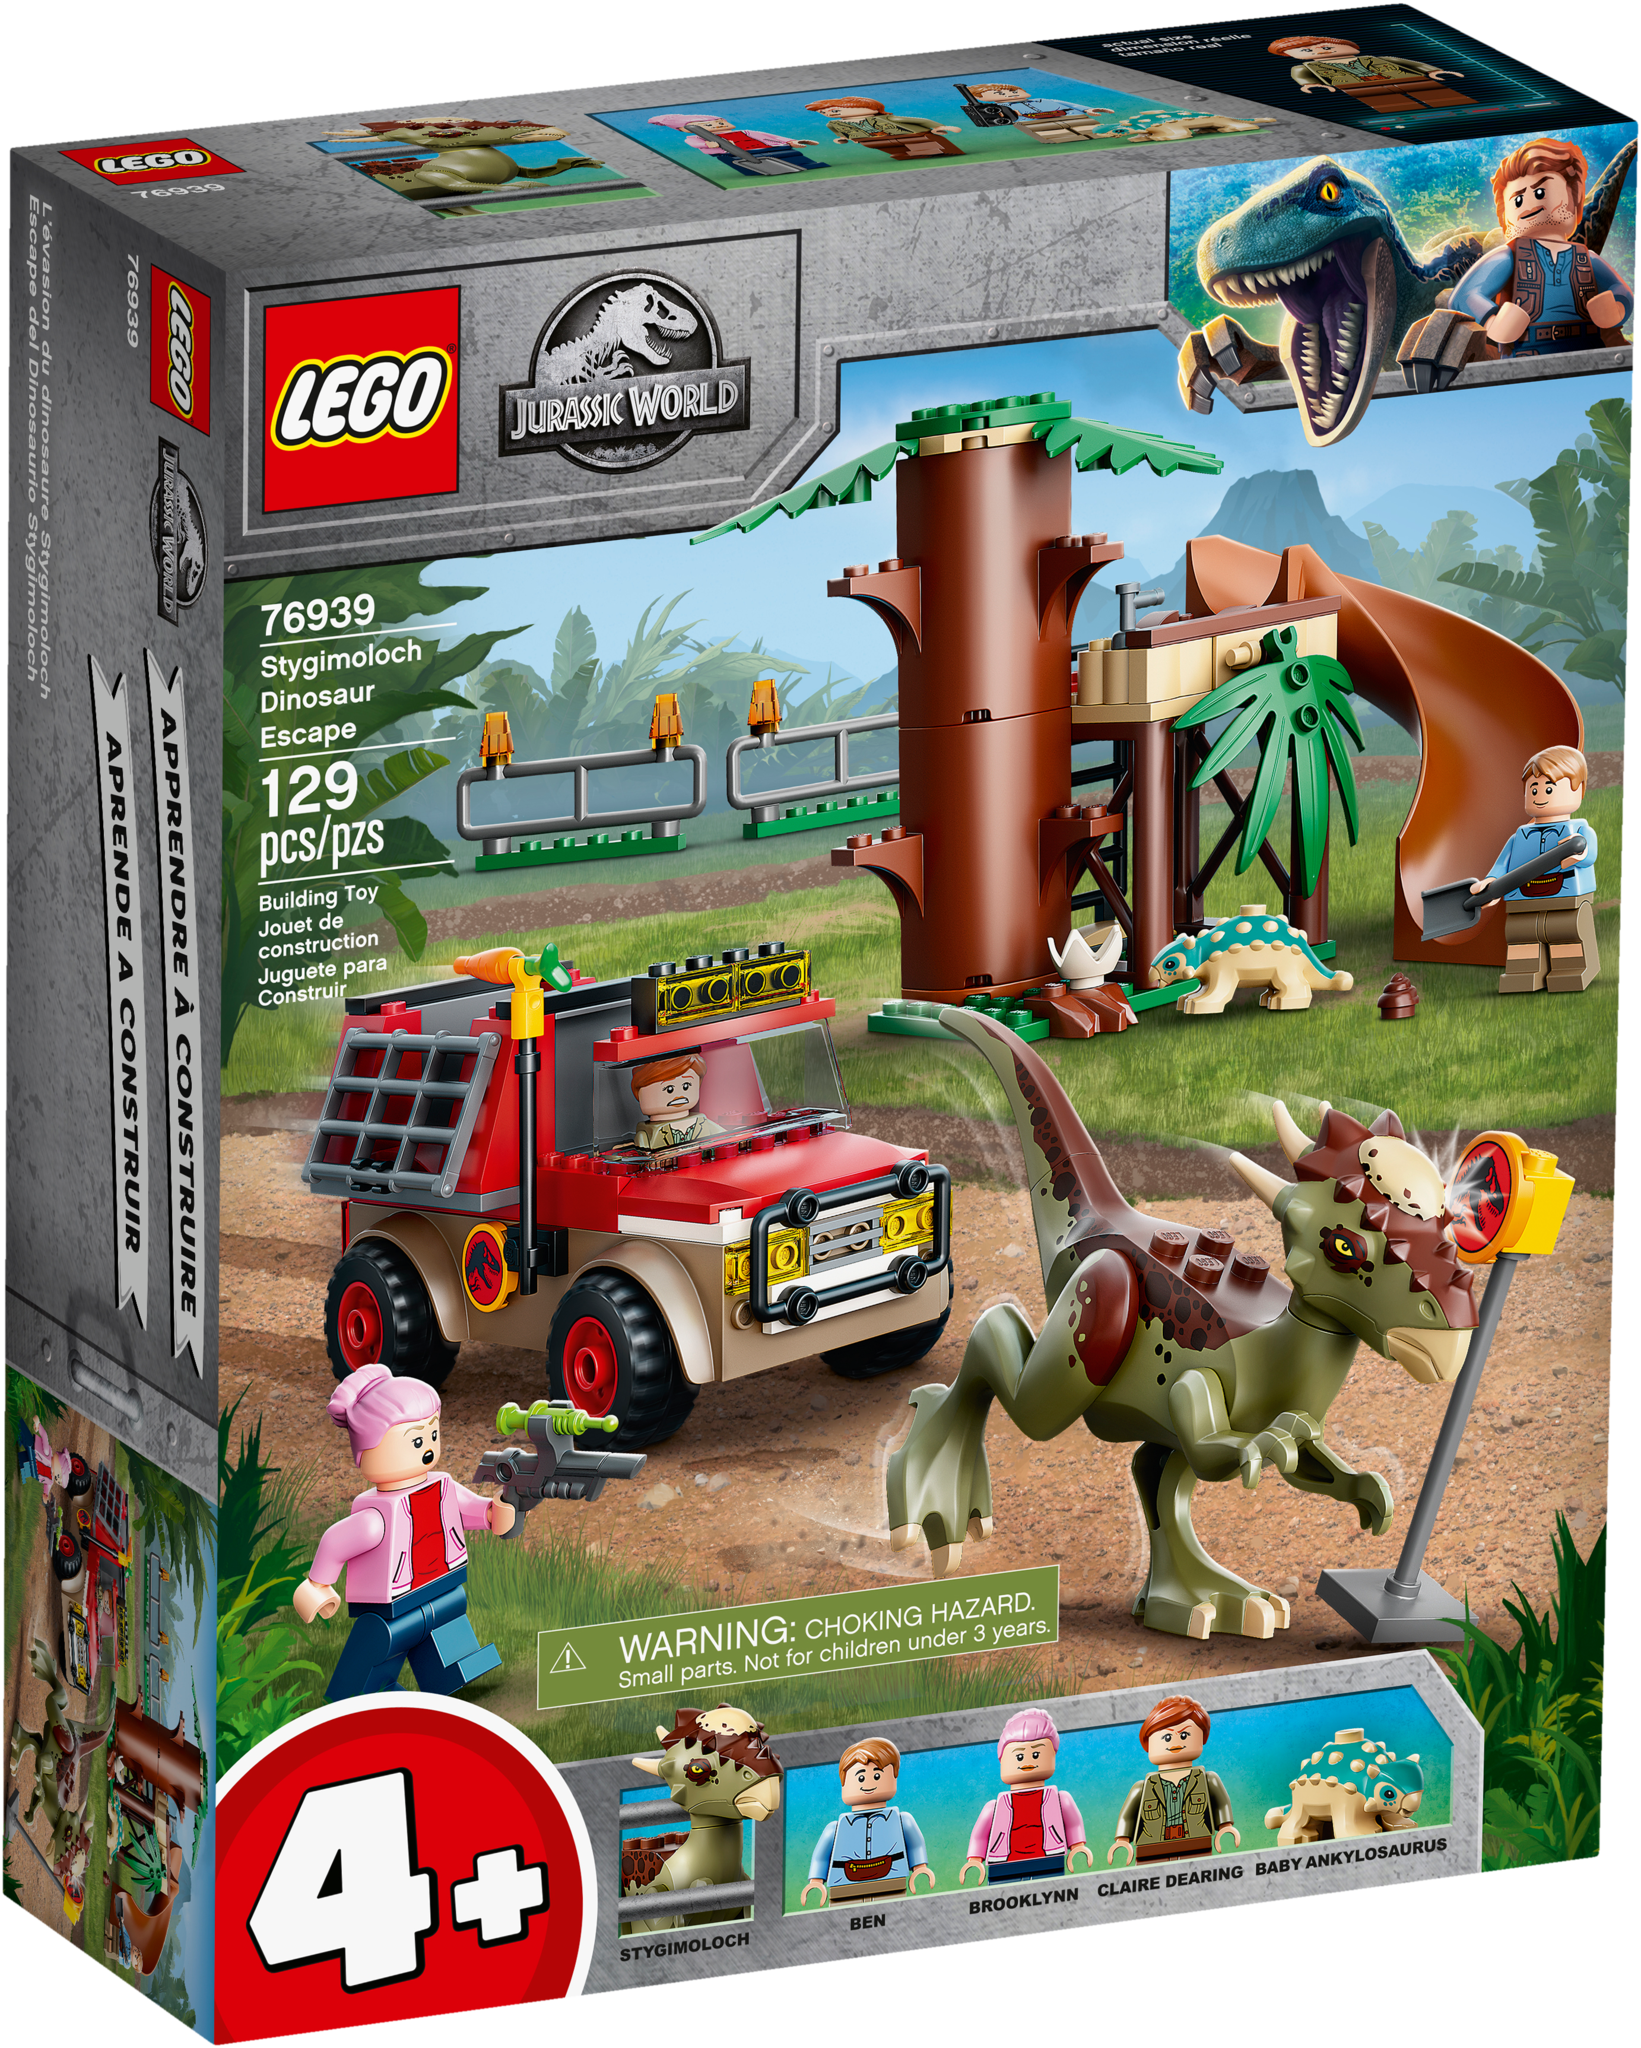 LEGO: Jurassic World - Stygimoloch Dinosaur Escape